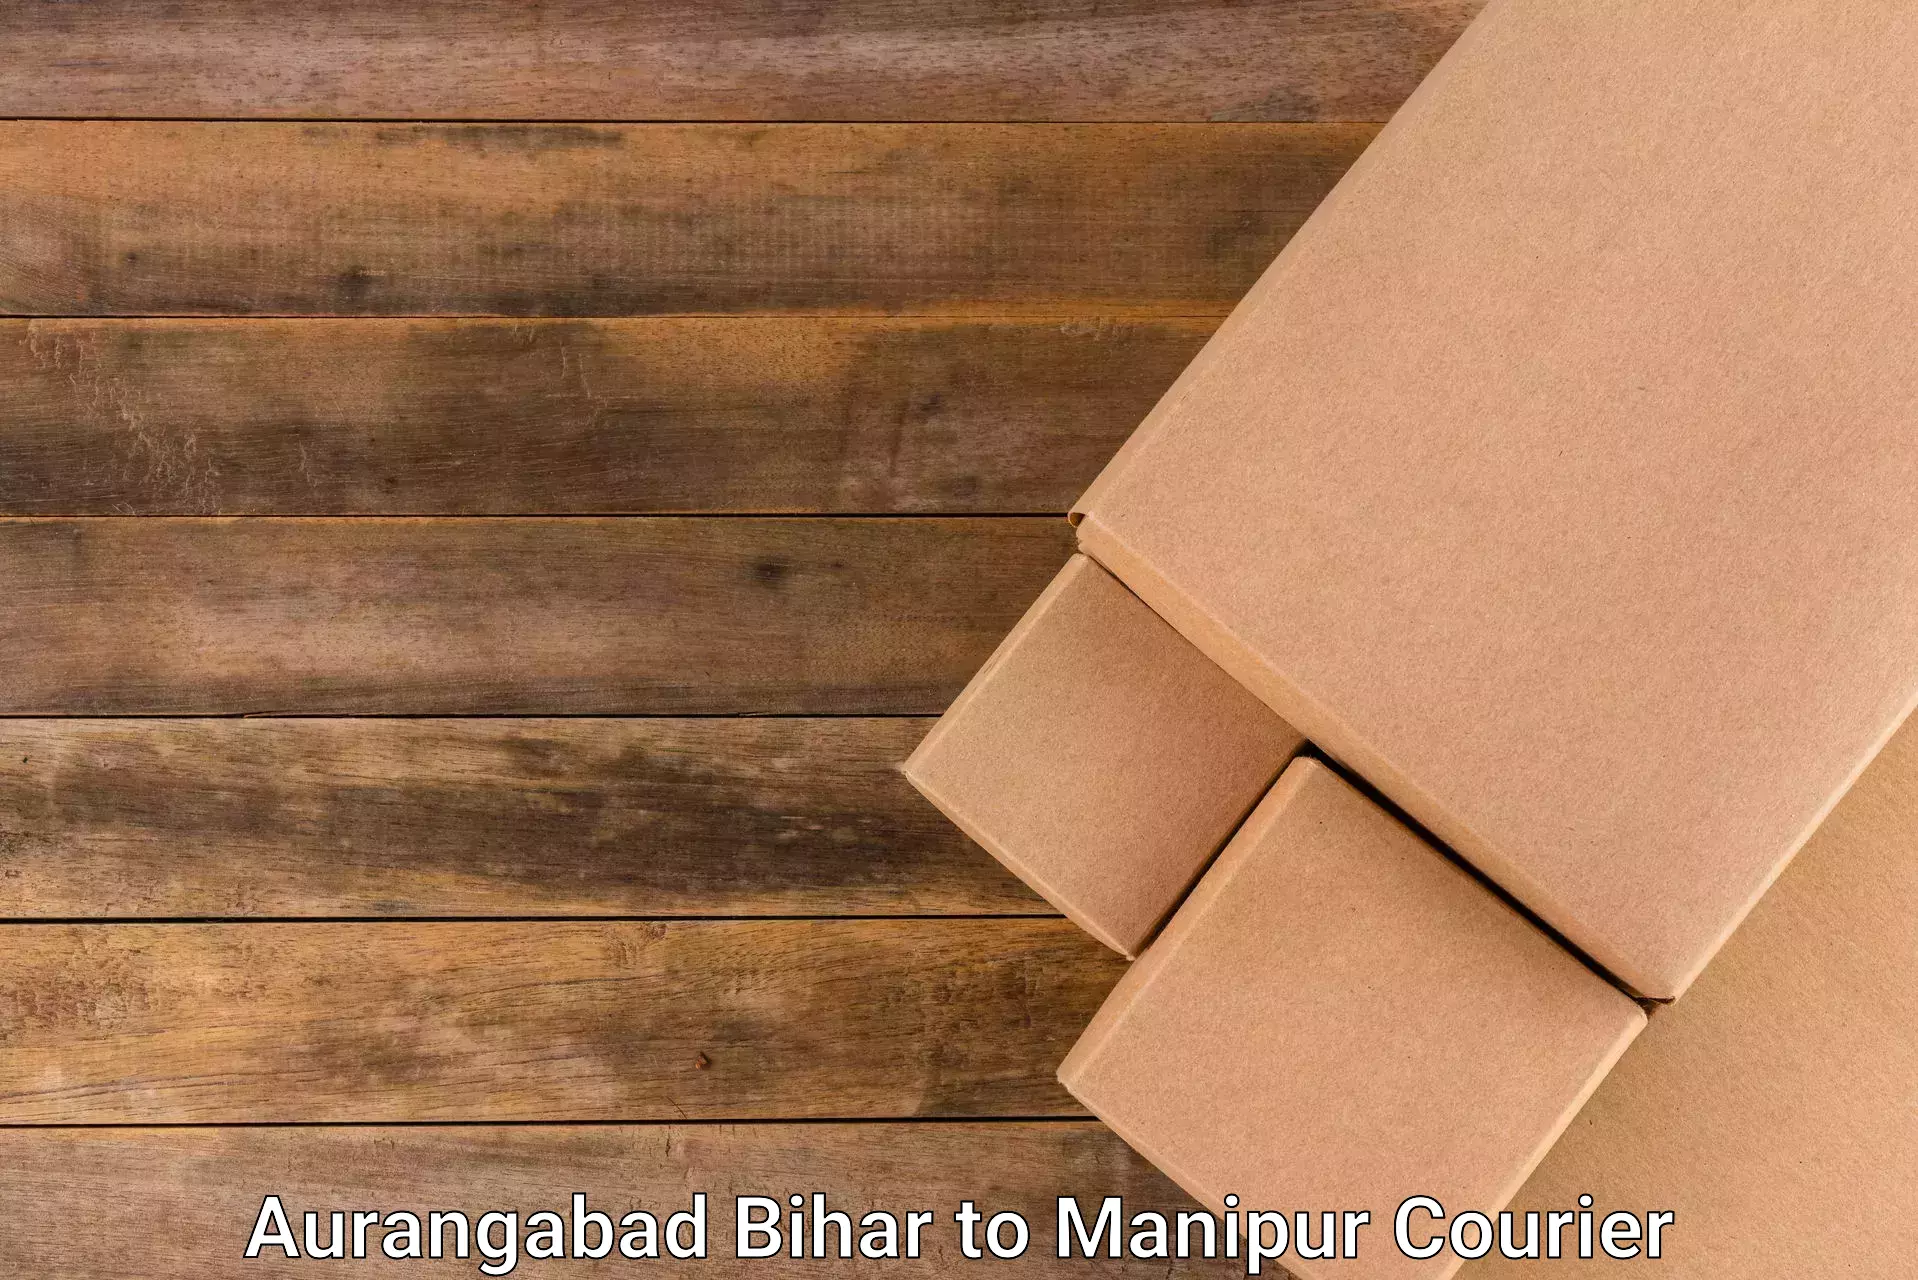 Affordable logistics services Aurangabad Bihar to Manipur